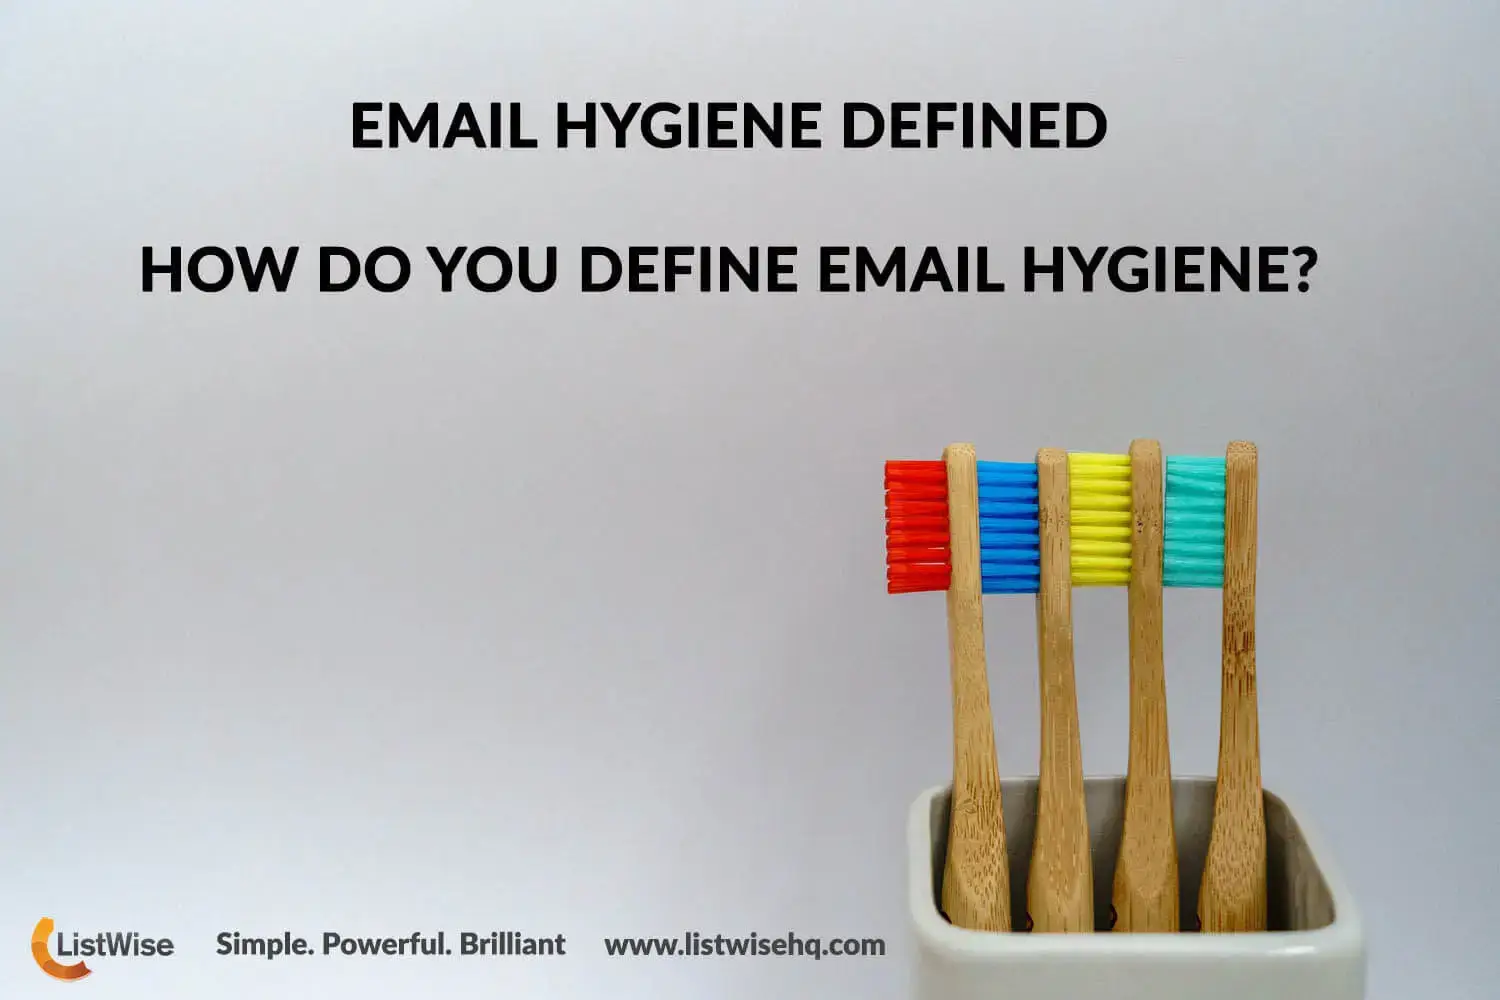 How do you define email hygiene?